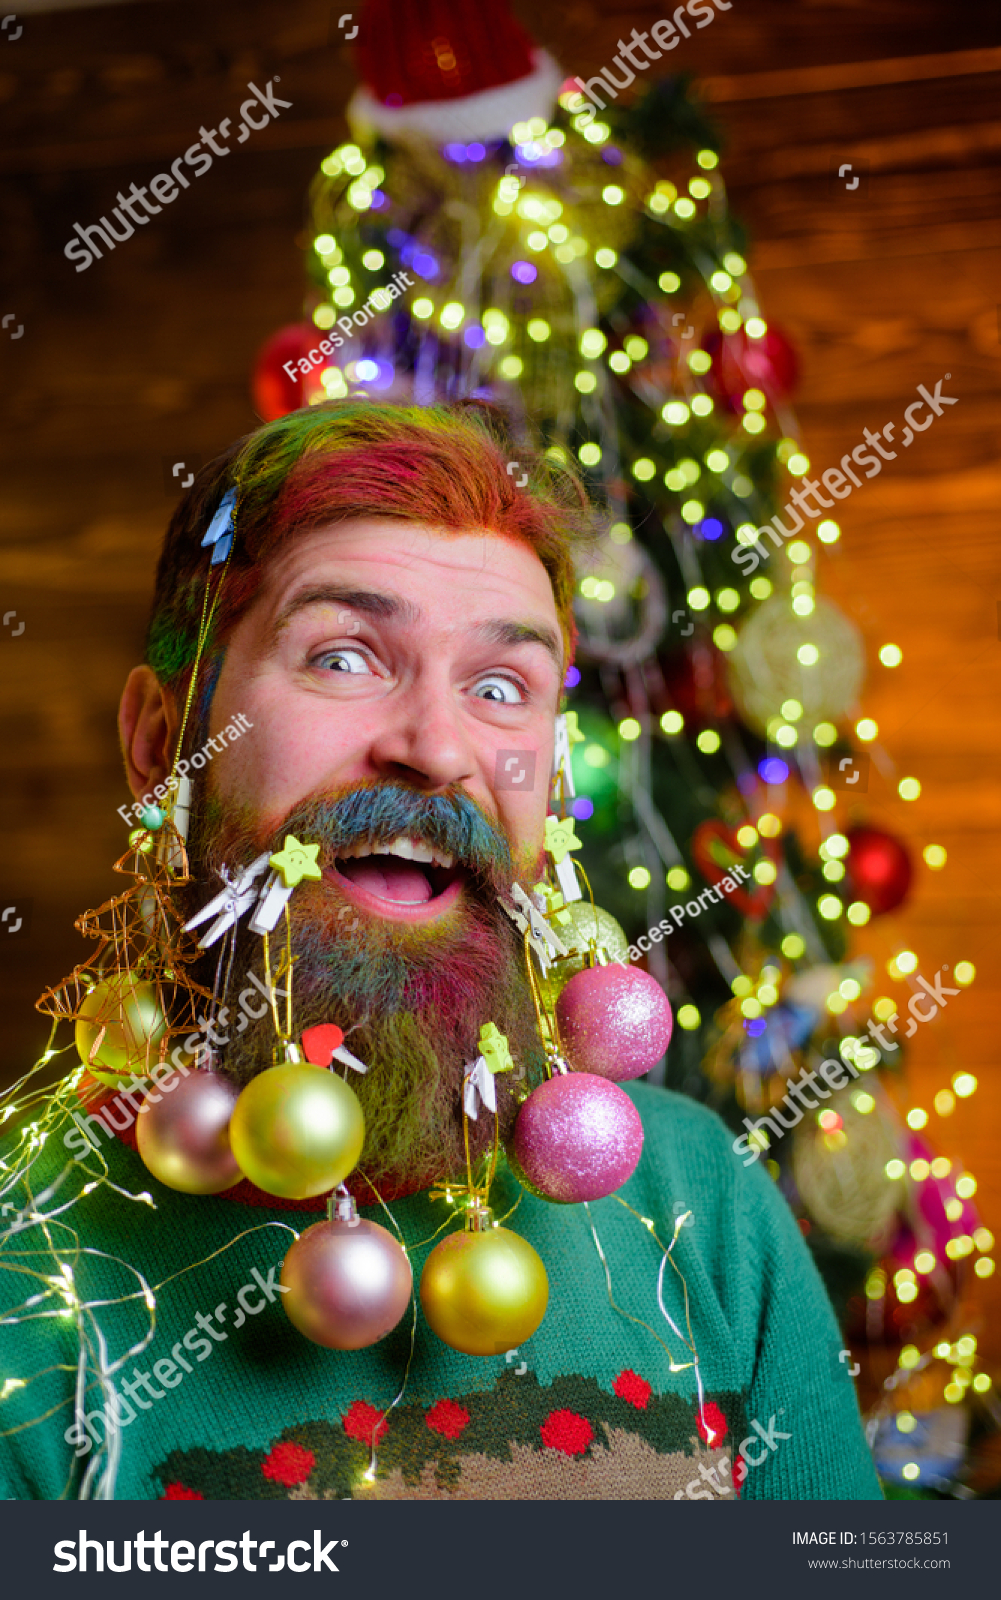 xmas beard decorations